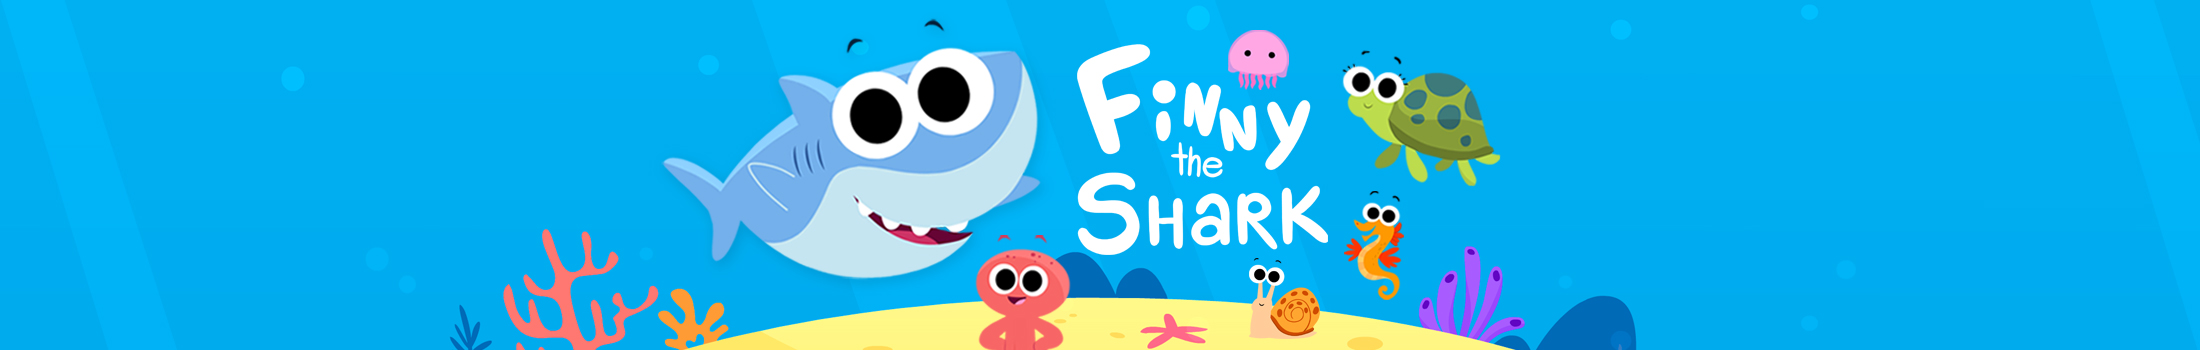 Finny the Shark Jumbilee Stories Game - Paper House